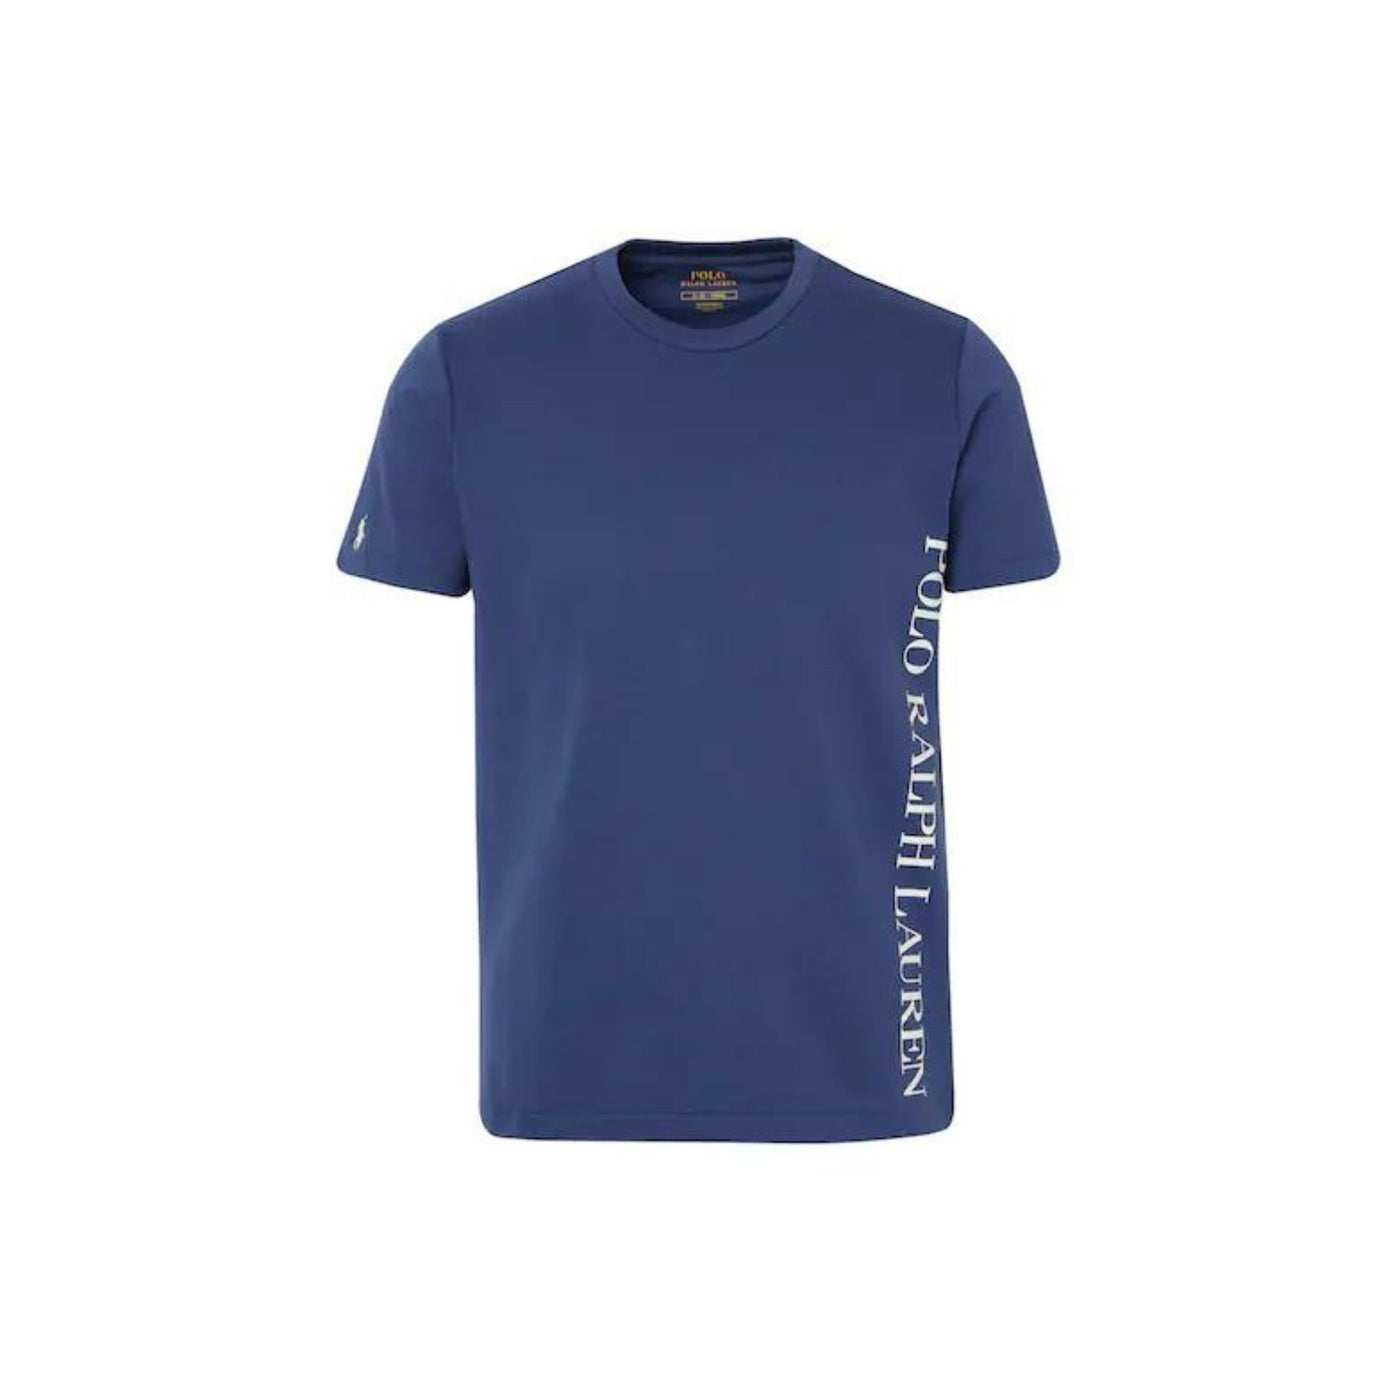 T-shirt uomo blu firmata Polo Ralph Lauren vista frontale